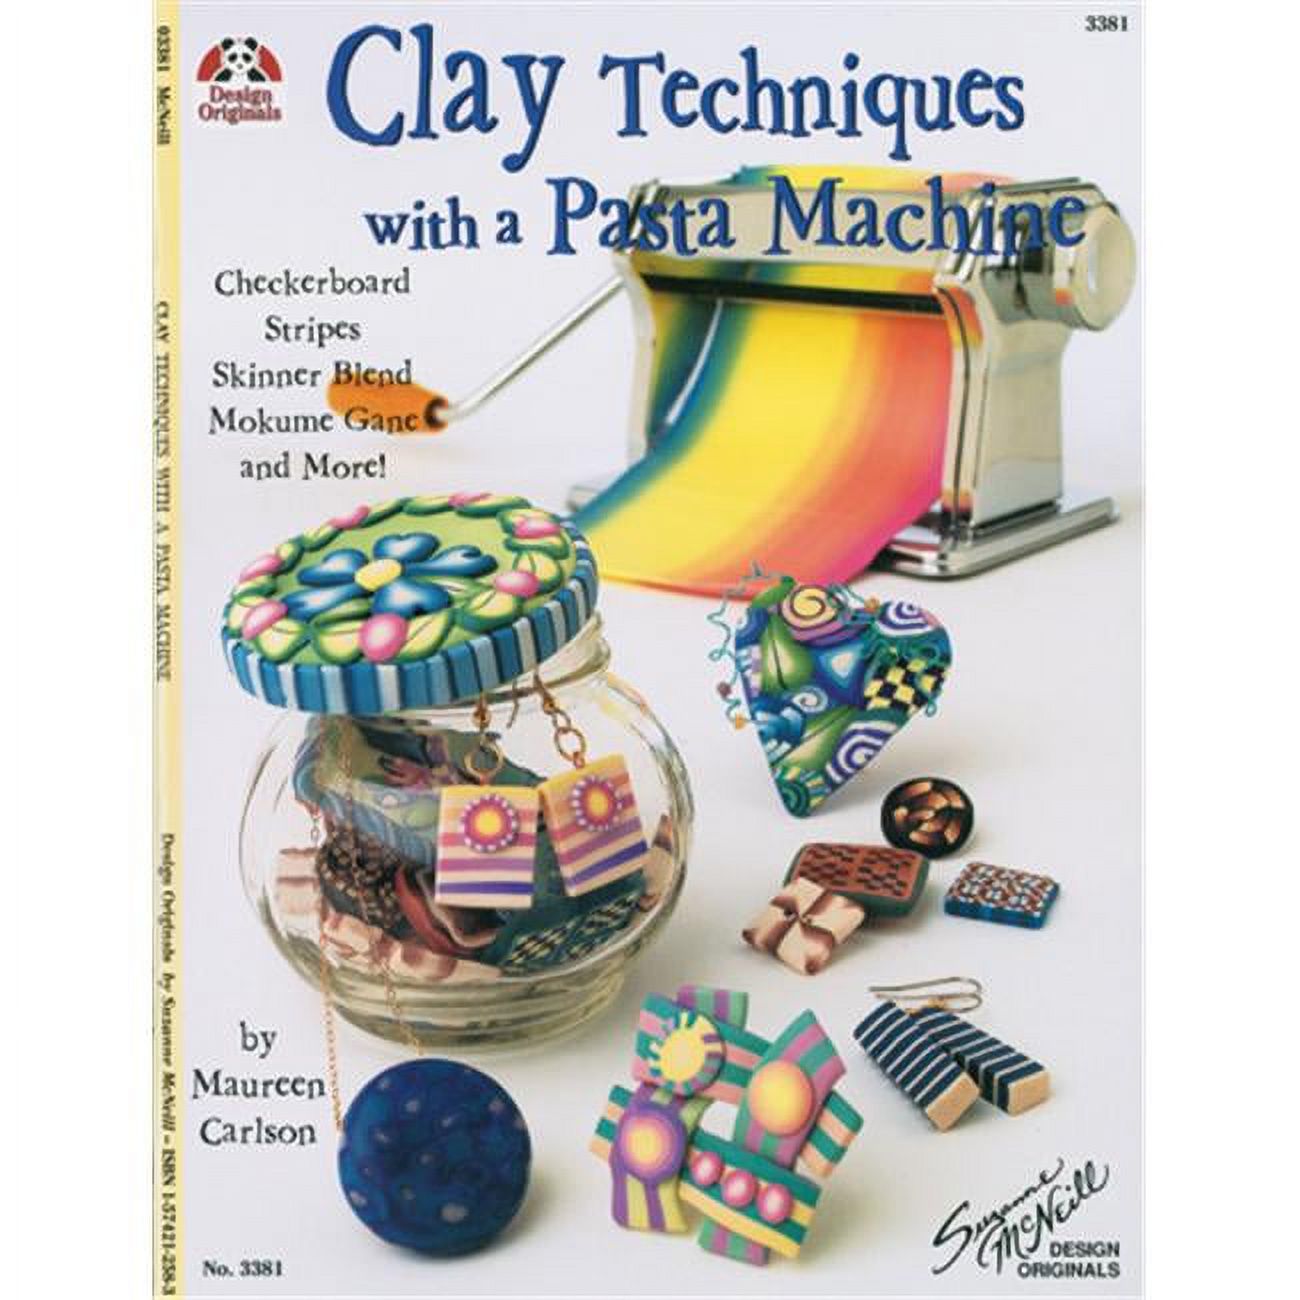 Design Originals DO-3381 Clay Techniques with a Pasta Machine - image 1 of 2